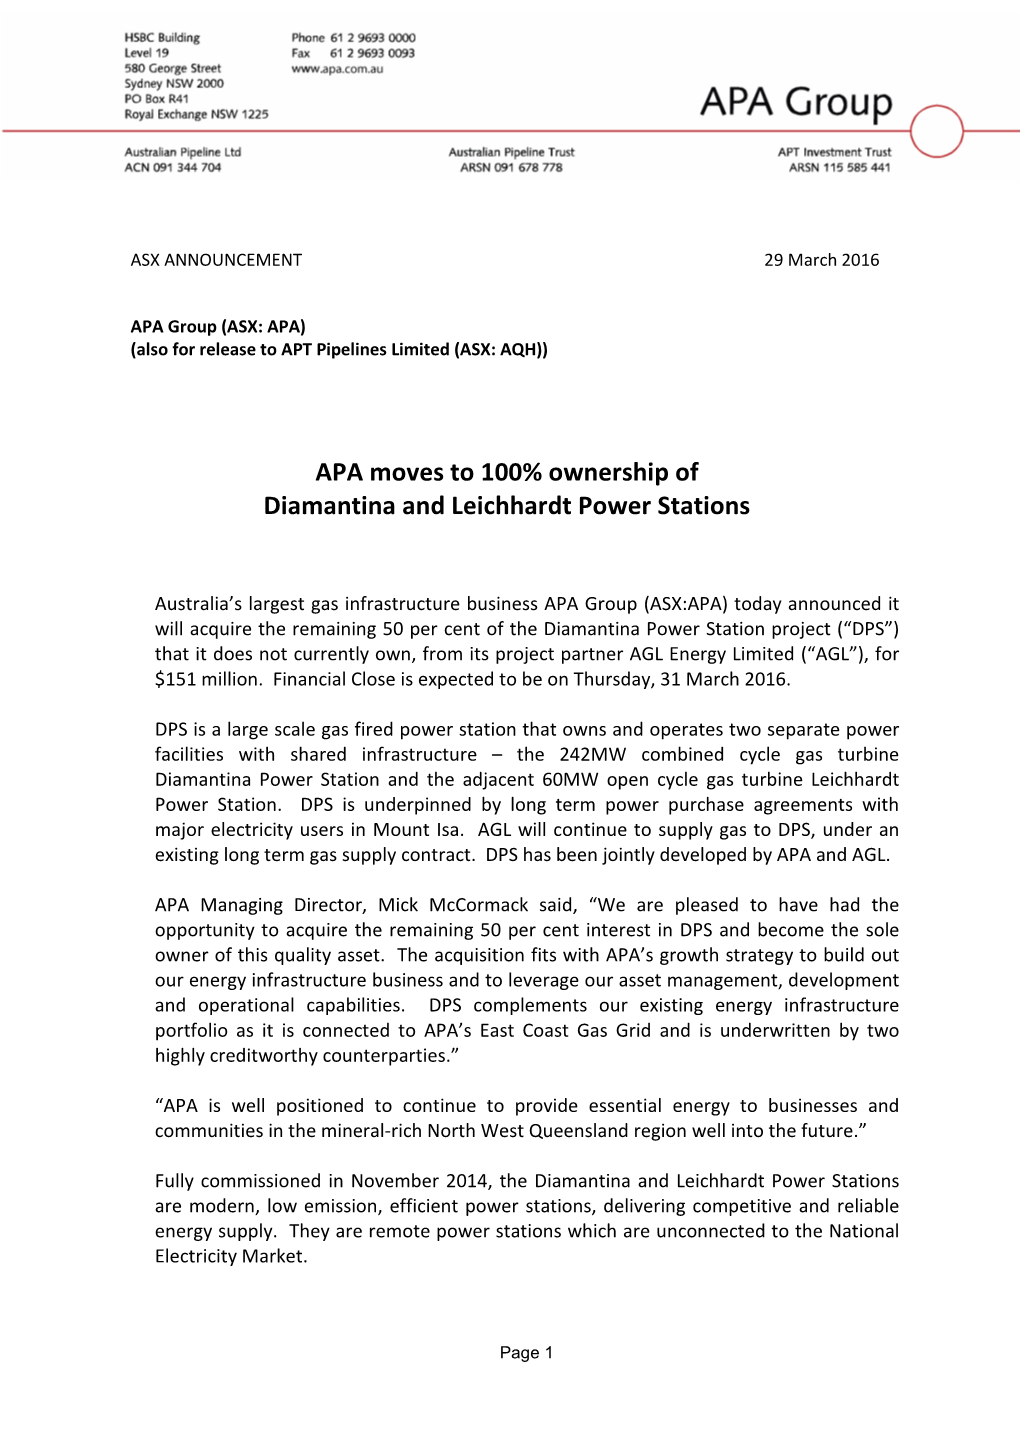 APA Group Letterhead and Follow-On